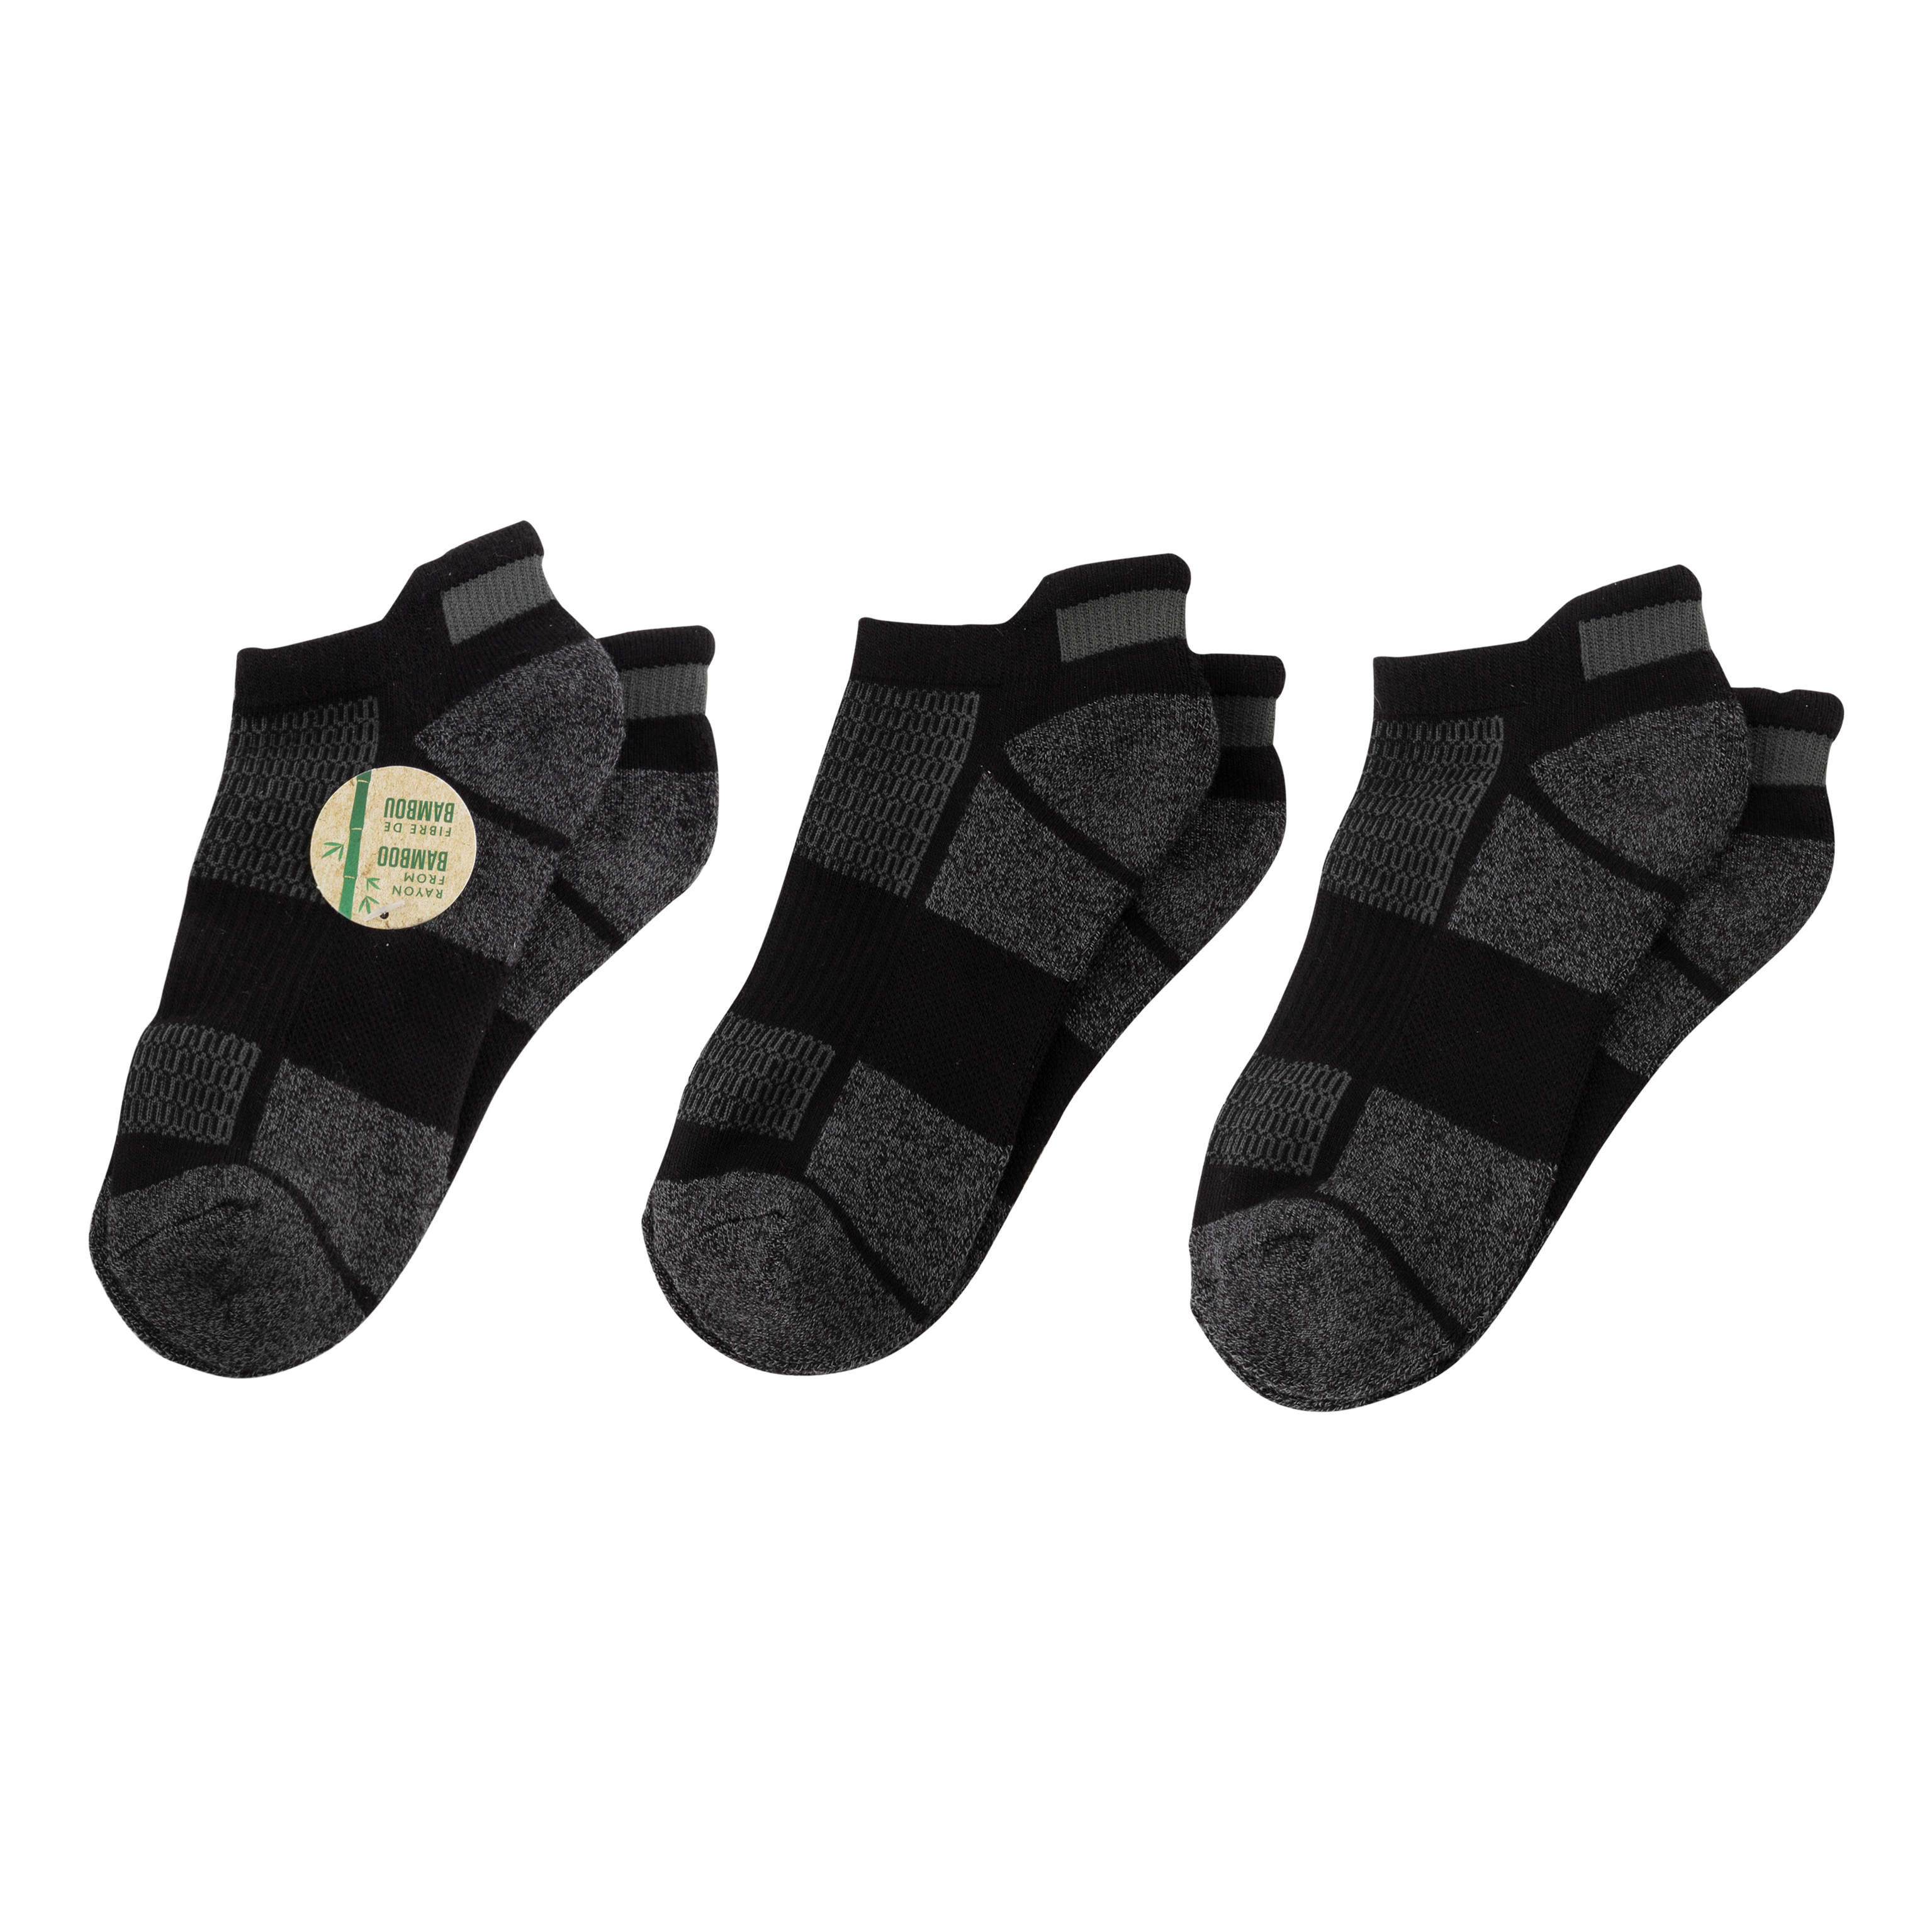 Sof Sole Women’s Low-Cut Perfom Socks – 3-Pack - Black Marl